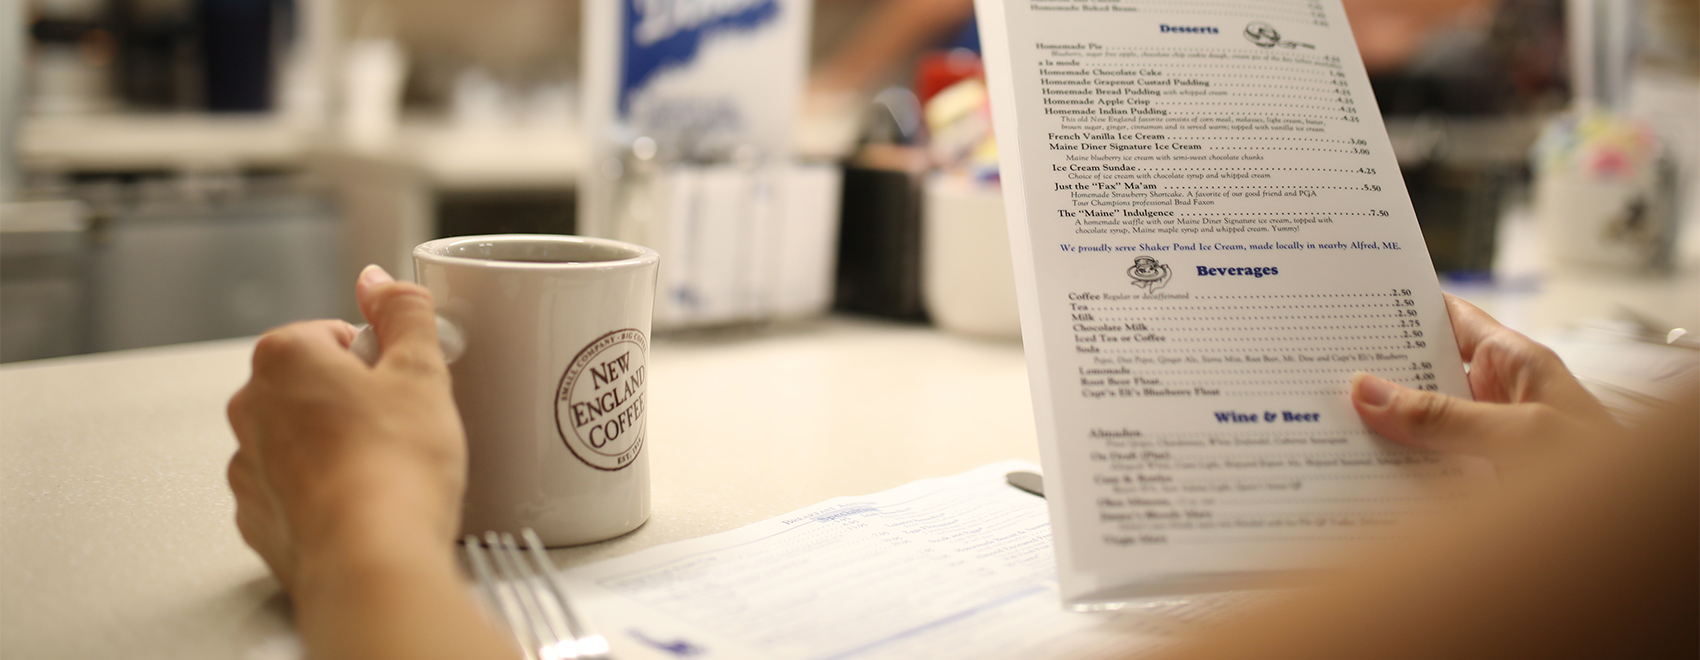 Coffee cup and customer reading menu